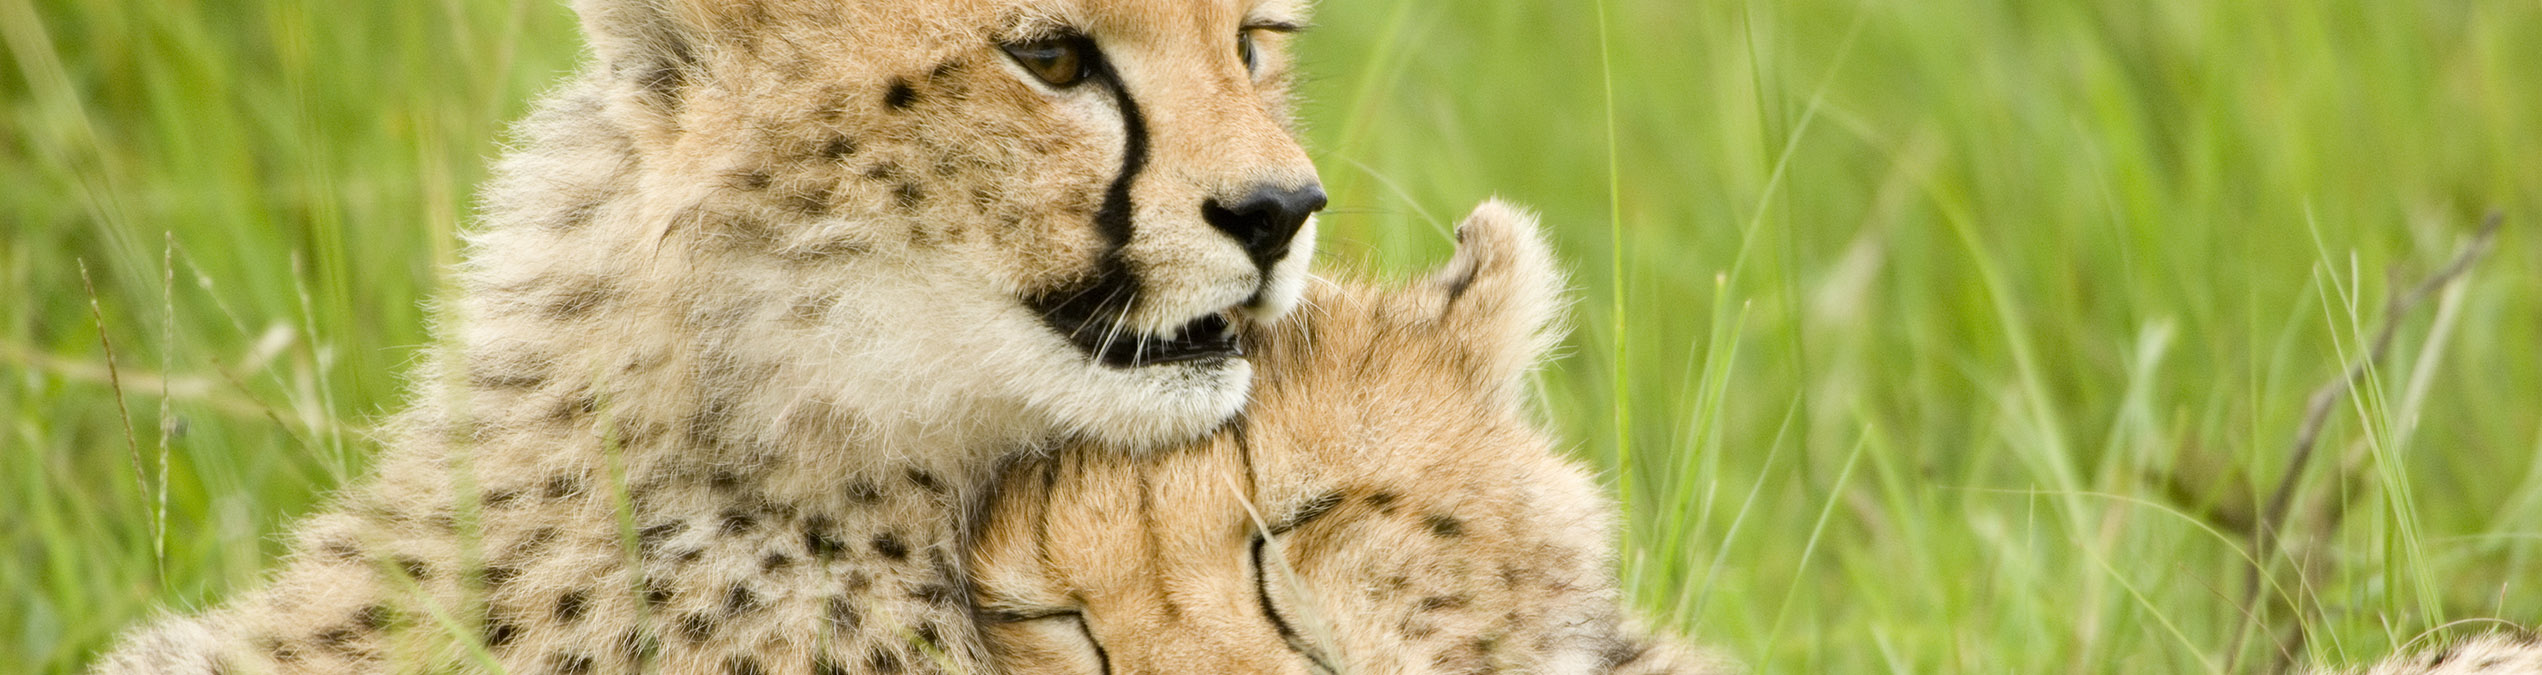 Safari Club - Kenya_Masai_Marar_Cheetah_Cubs